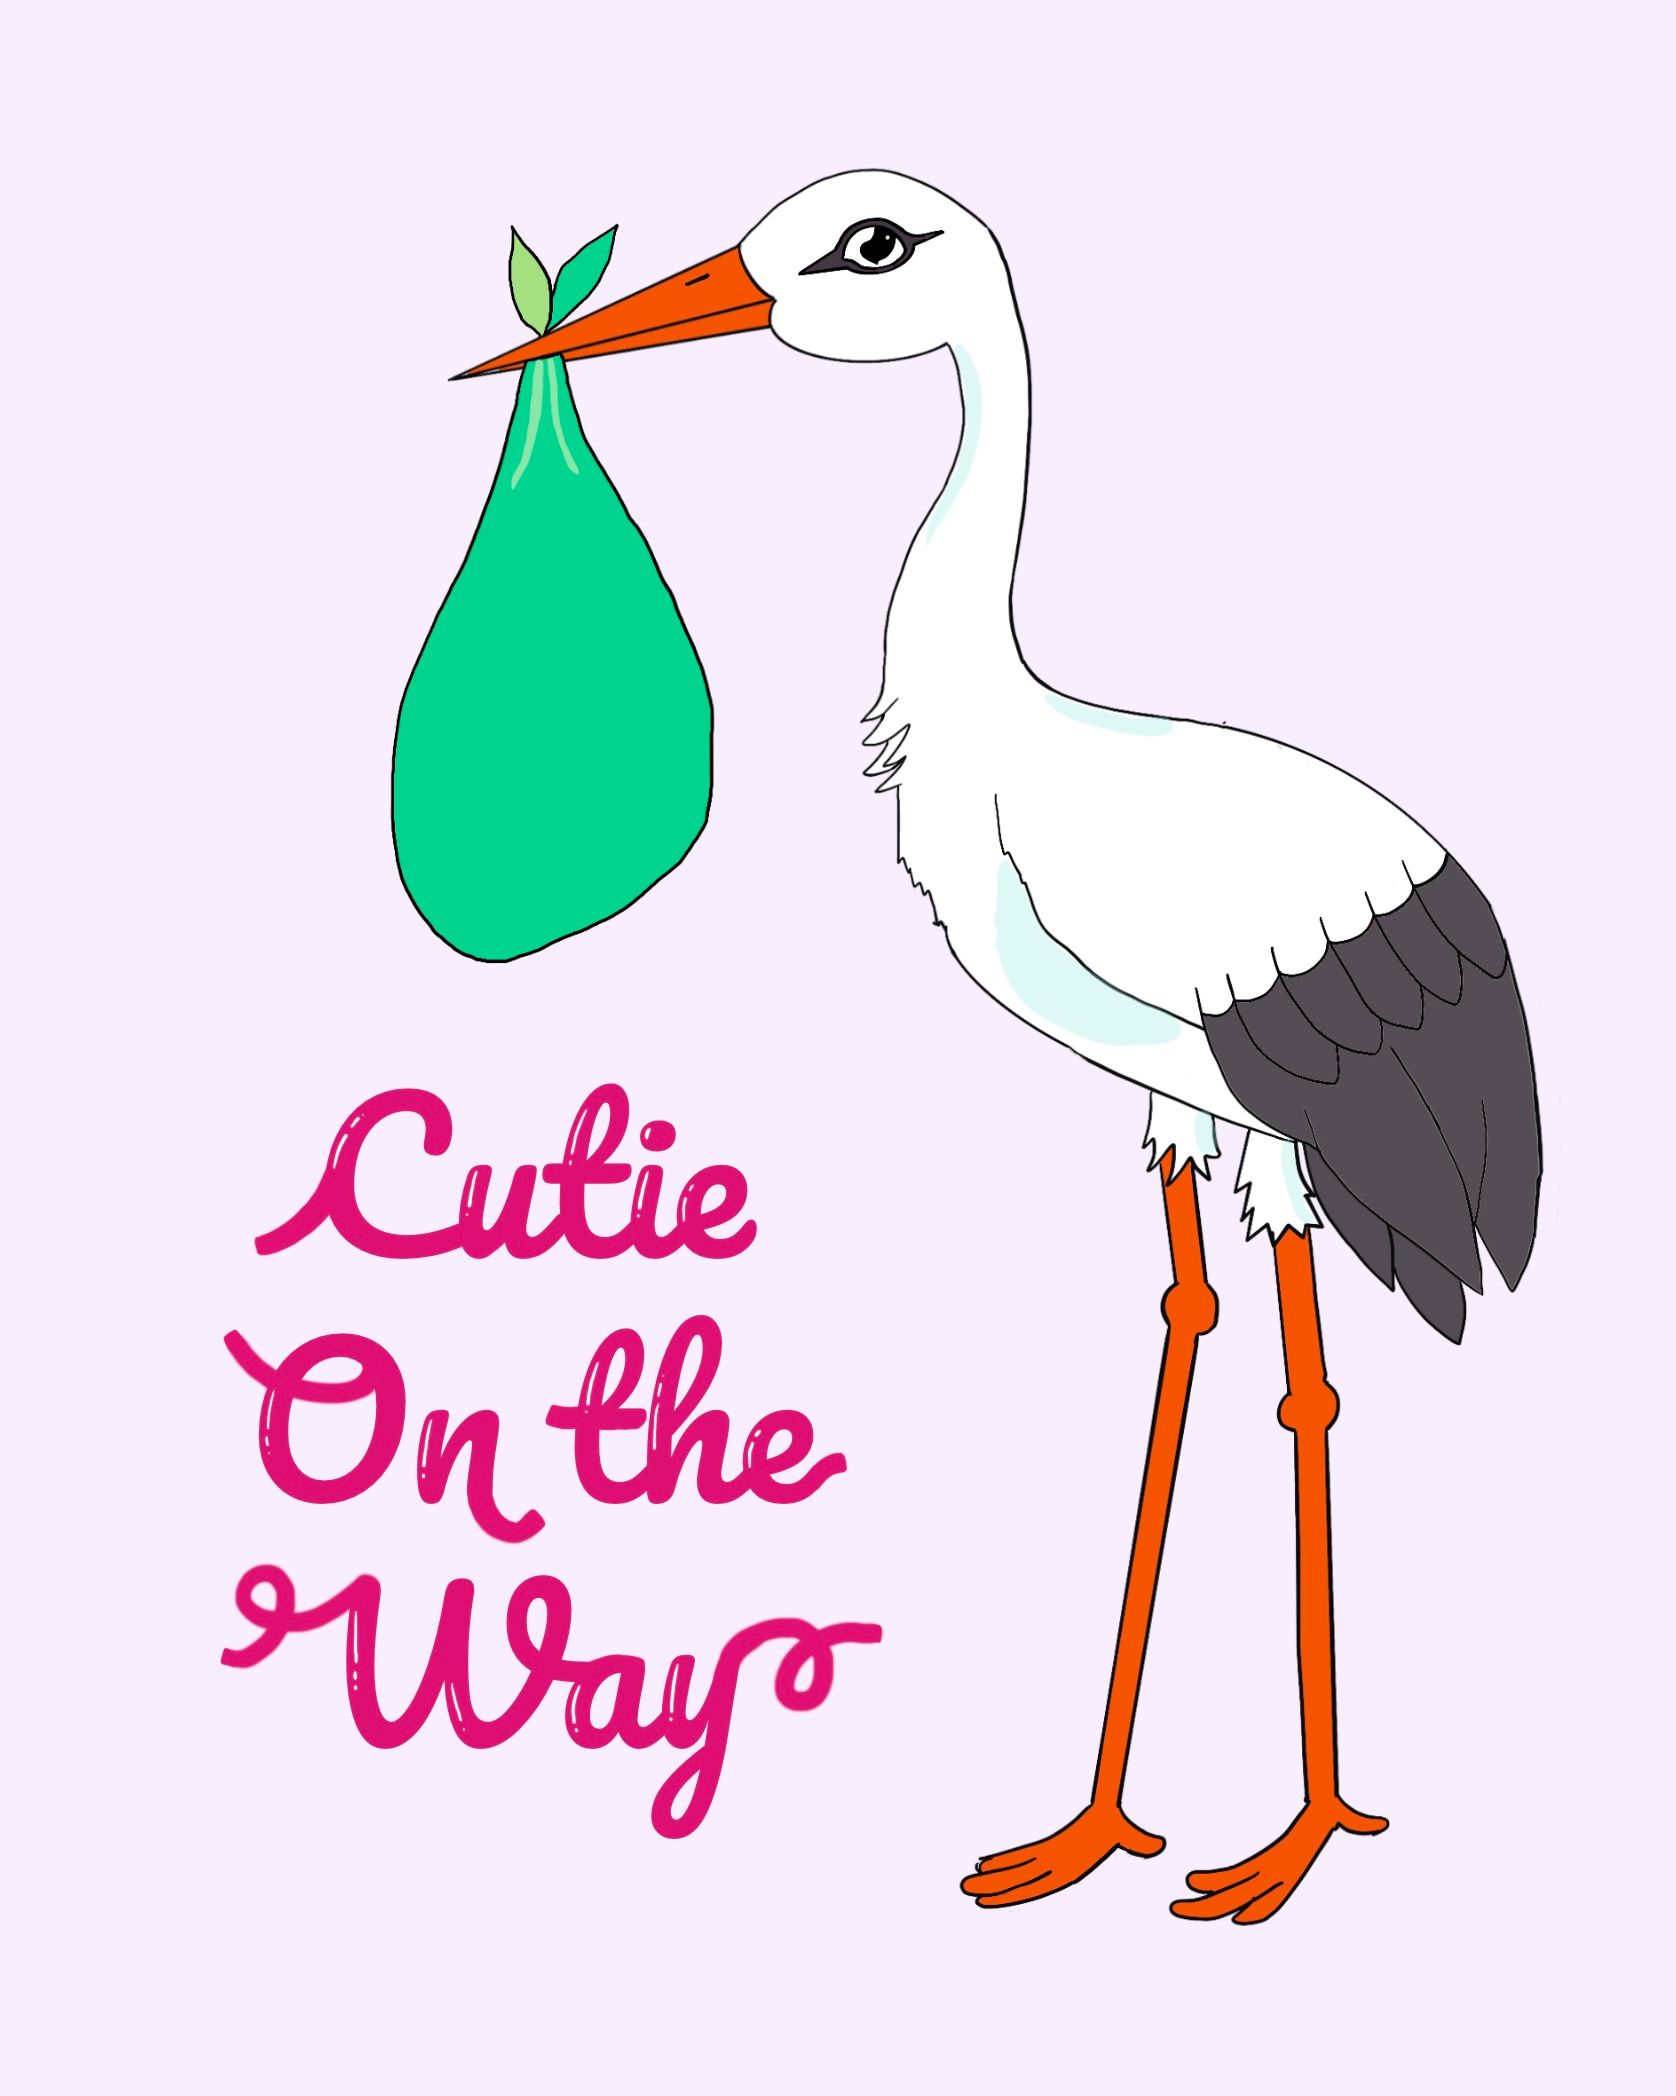 Card design "Cutie on the way"